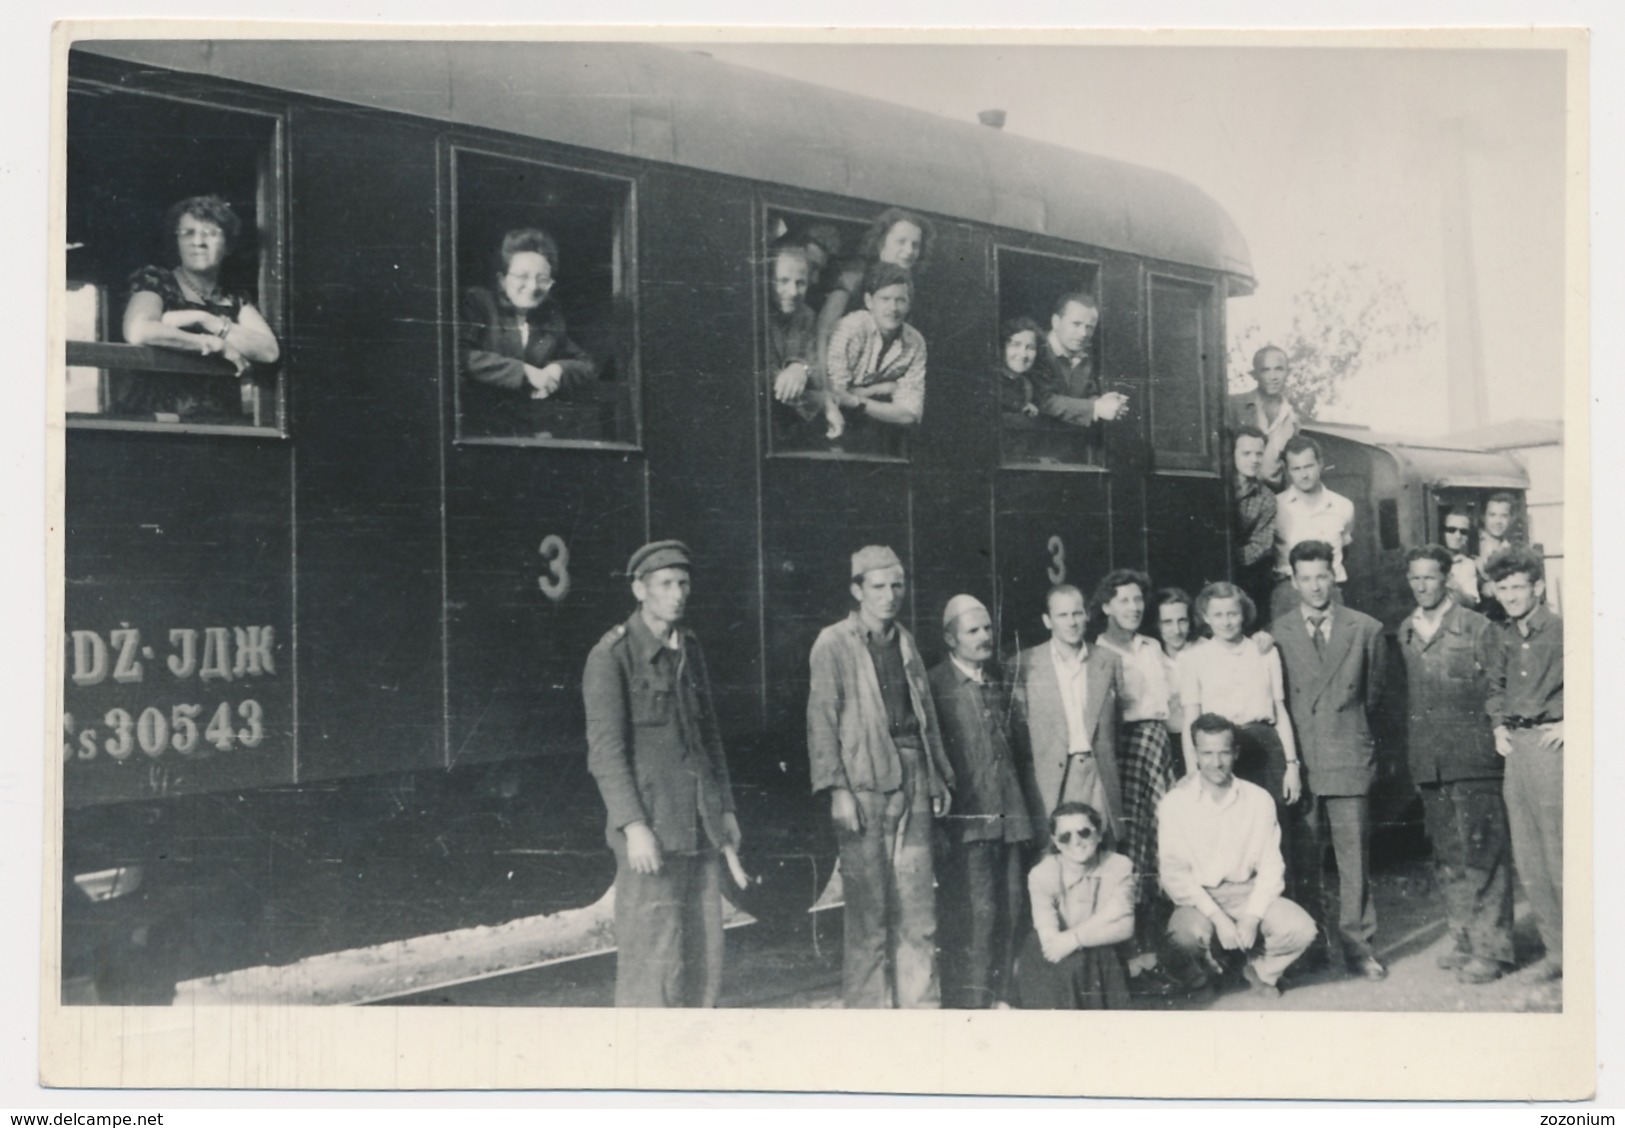 REAL PHOTO -  TRAIN In Railway Station Men Railway Workers  -  Jugoslovenska Zeleznica,  Old Photo - Trains